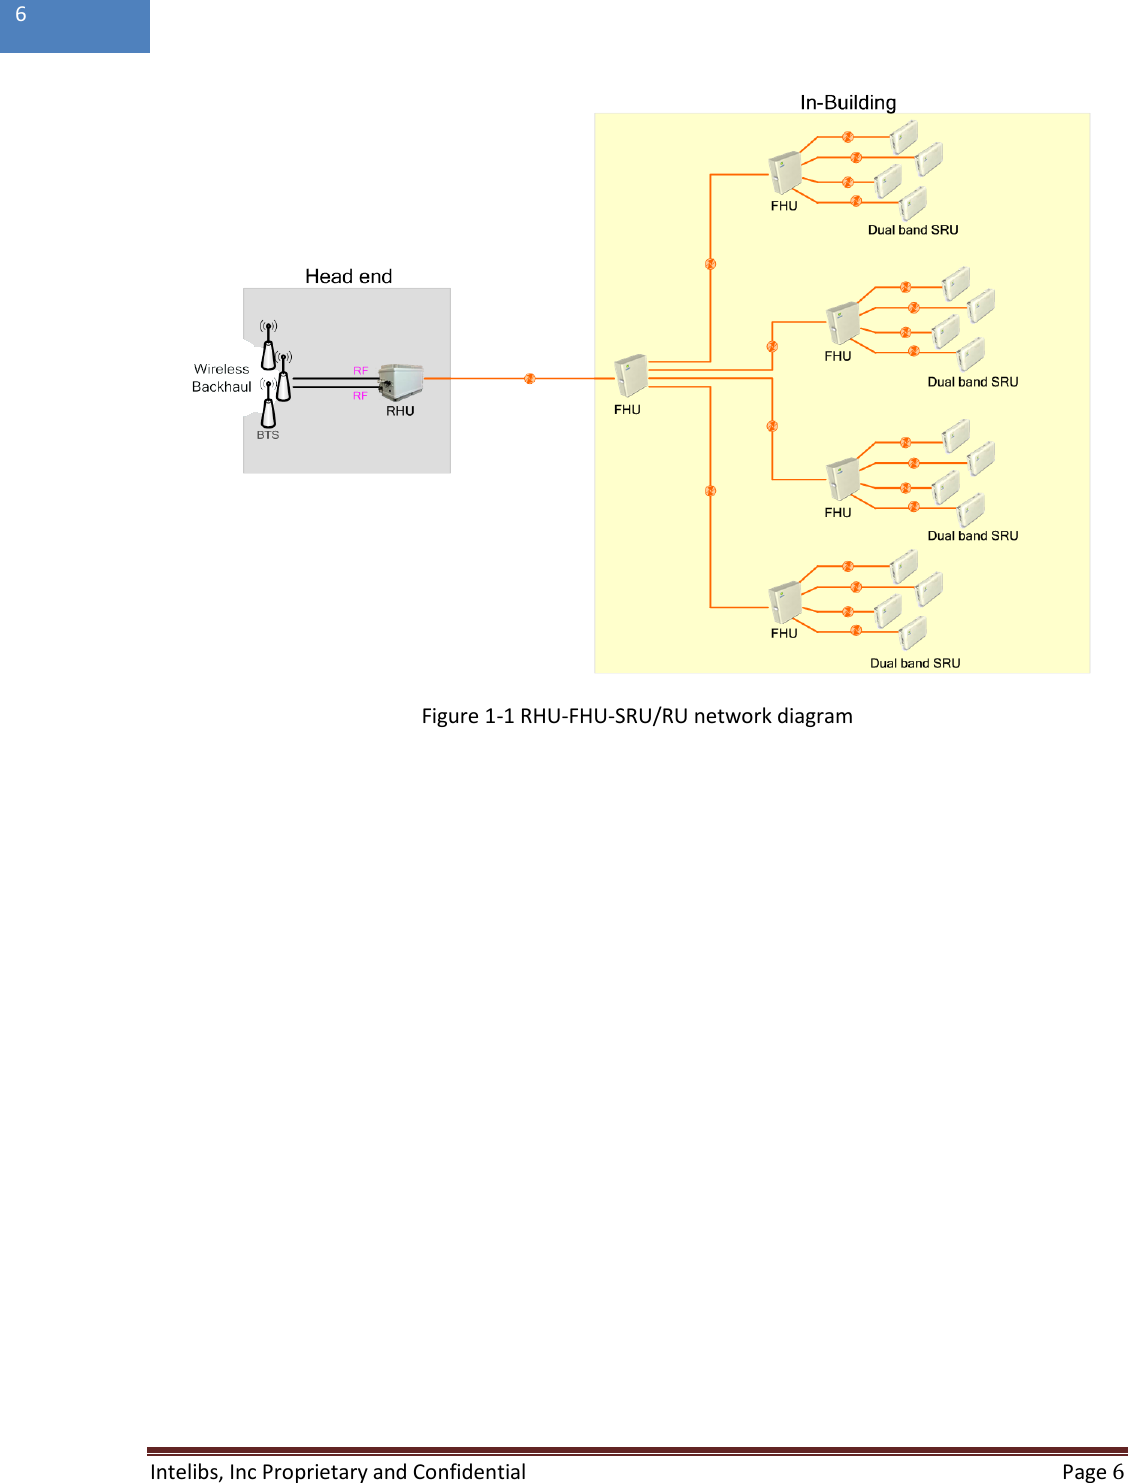  Intelibs, Inc Proprietary and Confidential  Page 6  6    Figure 1-1 RHU-FHU-SRU/RU network diagram    